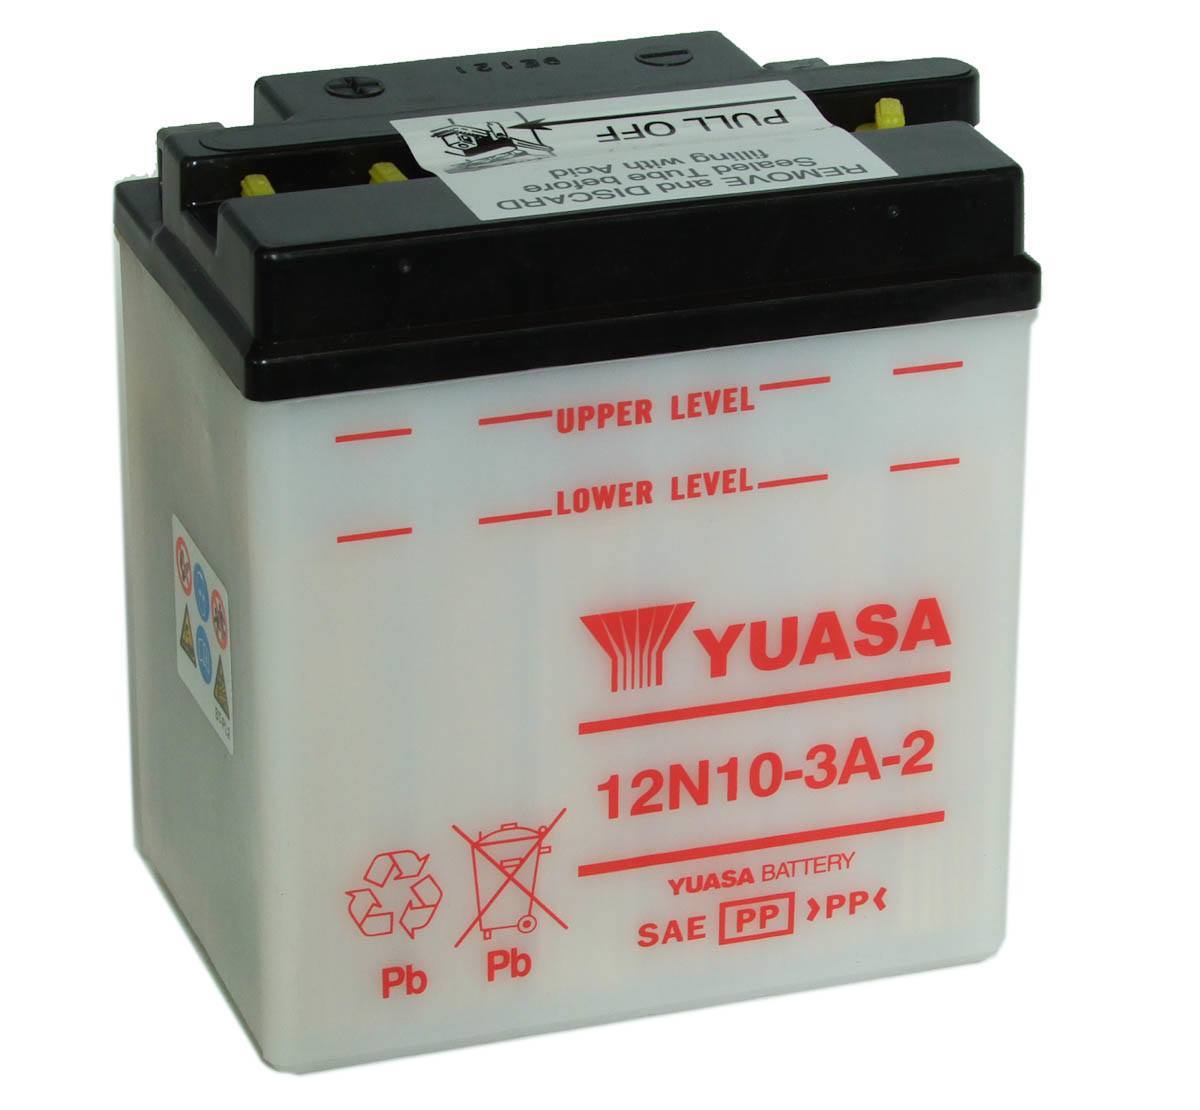 Yuasa 12N10-3A-2 Motorcycle Battery